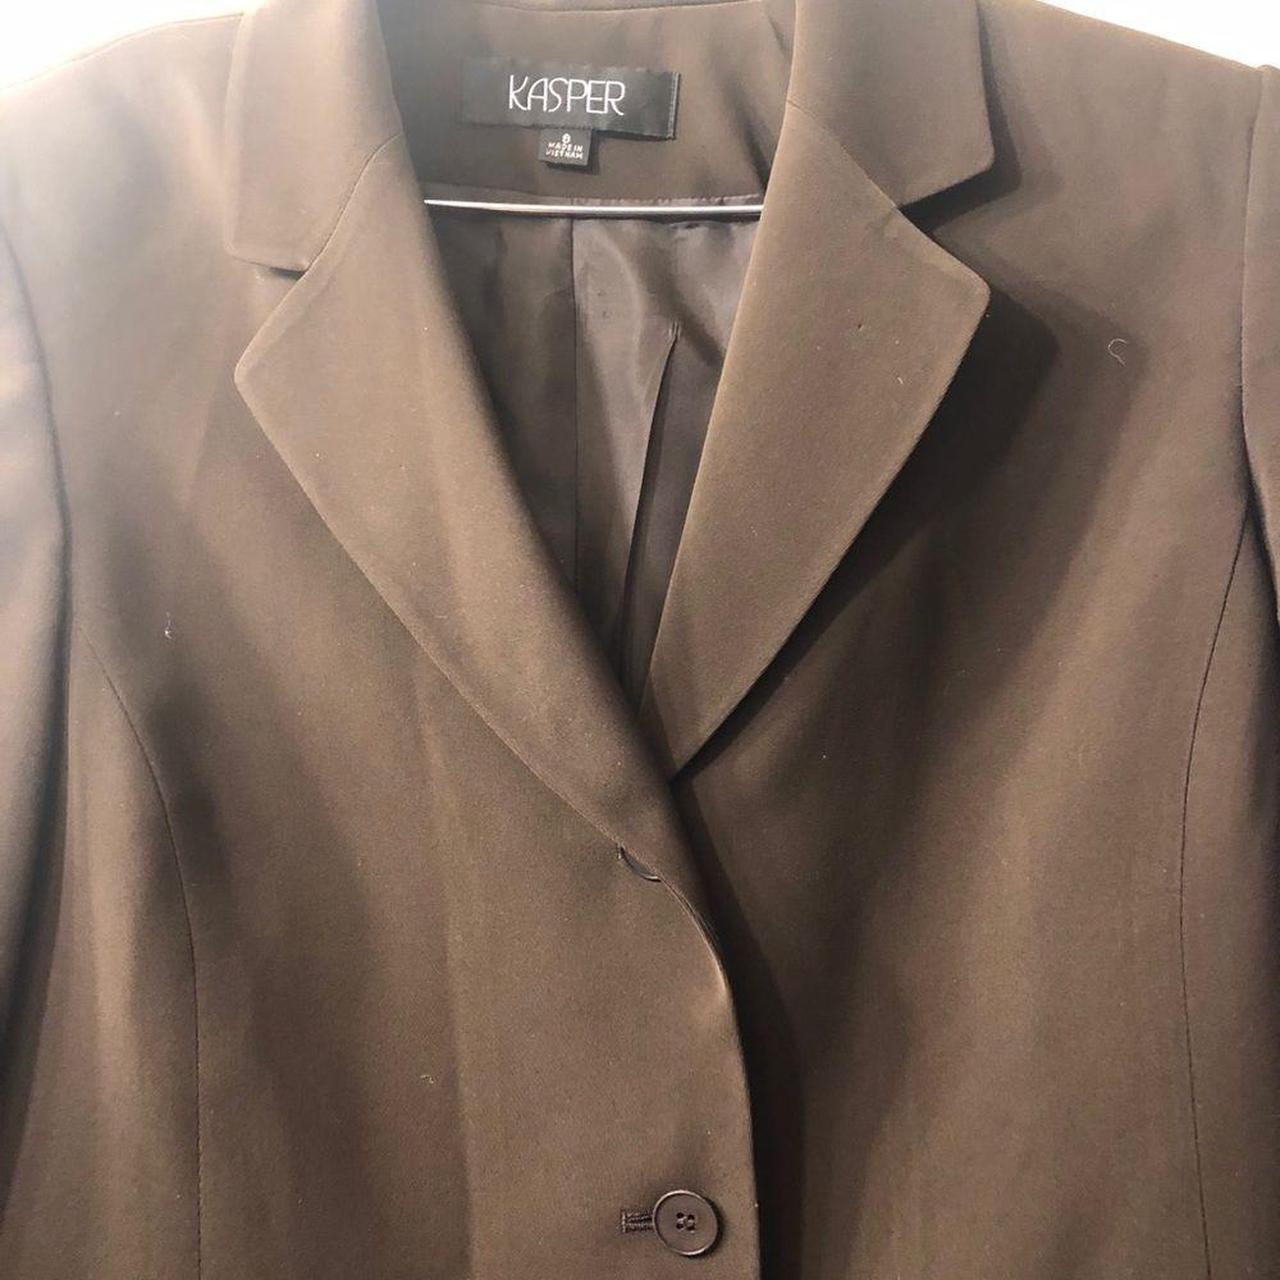 Product Image 3 - Kasper brown blazer classic look